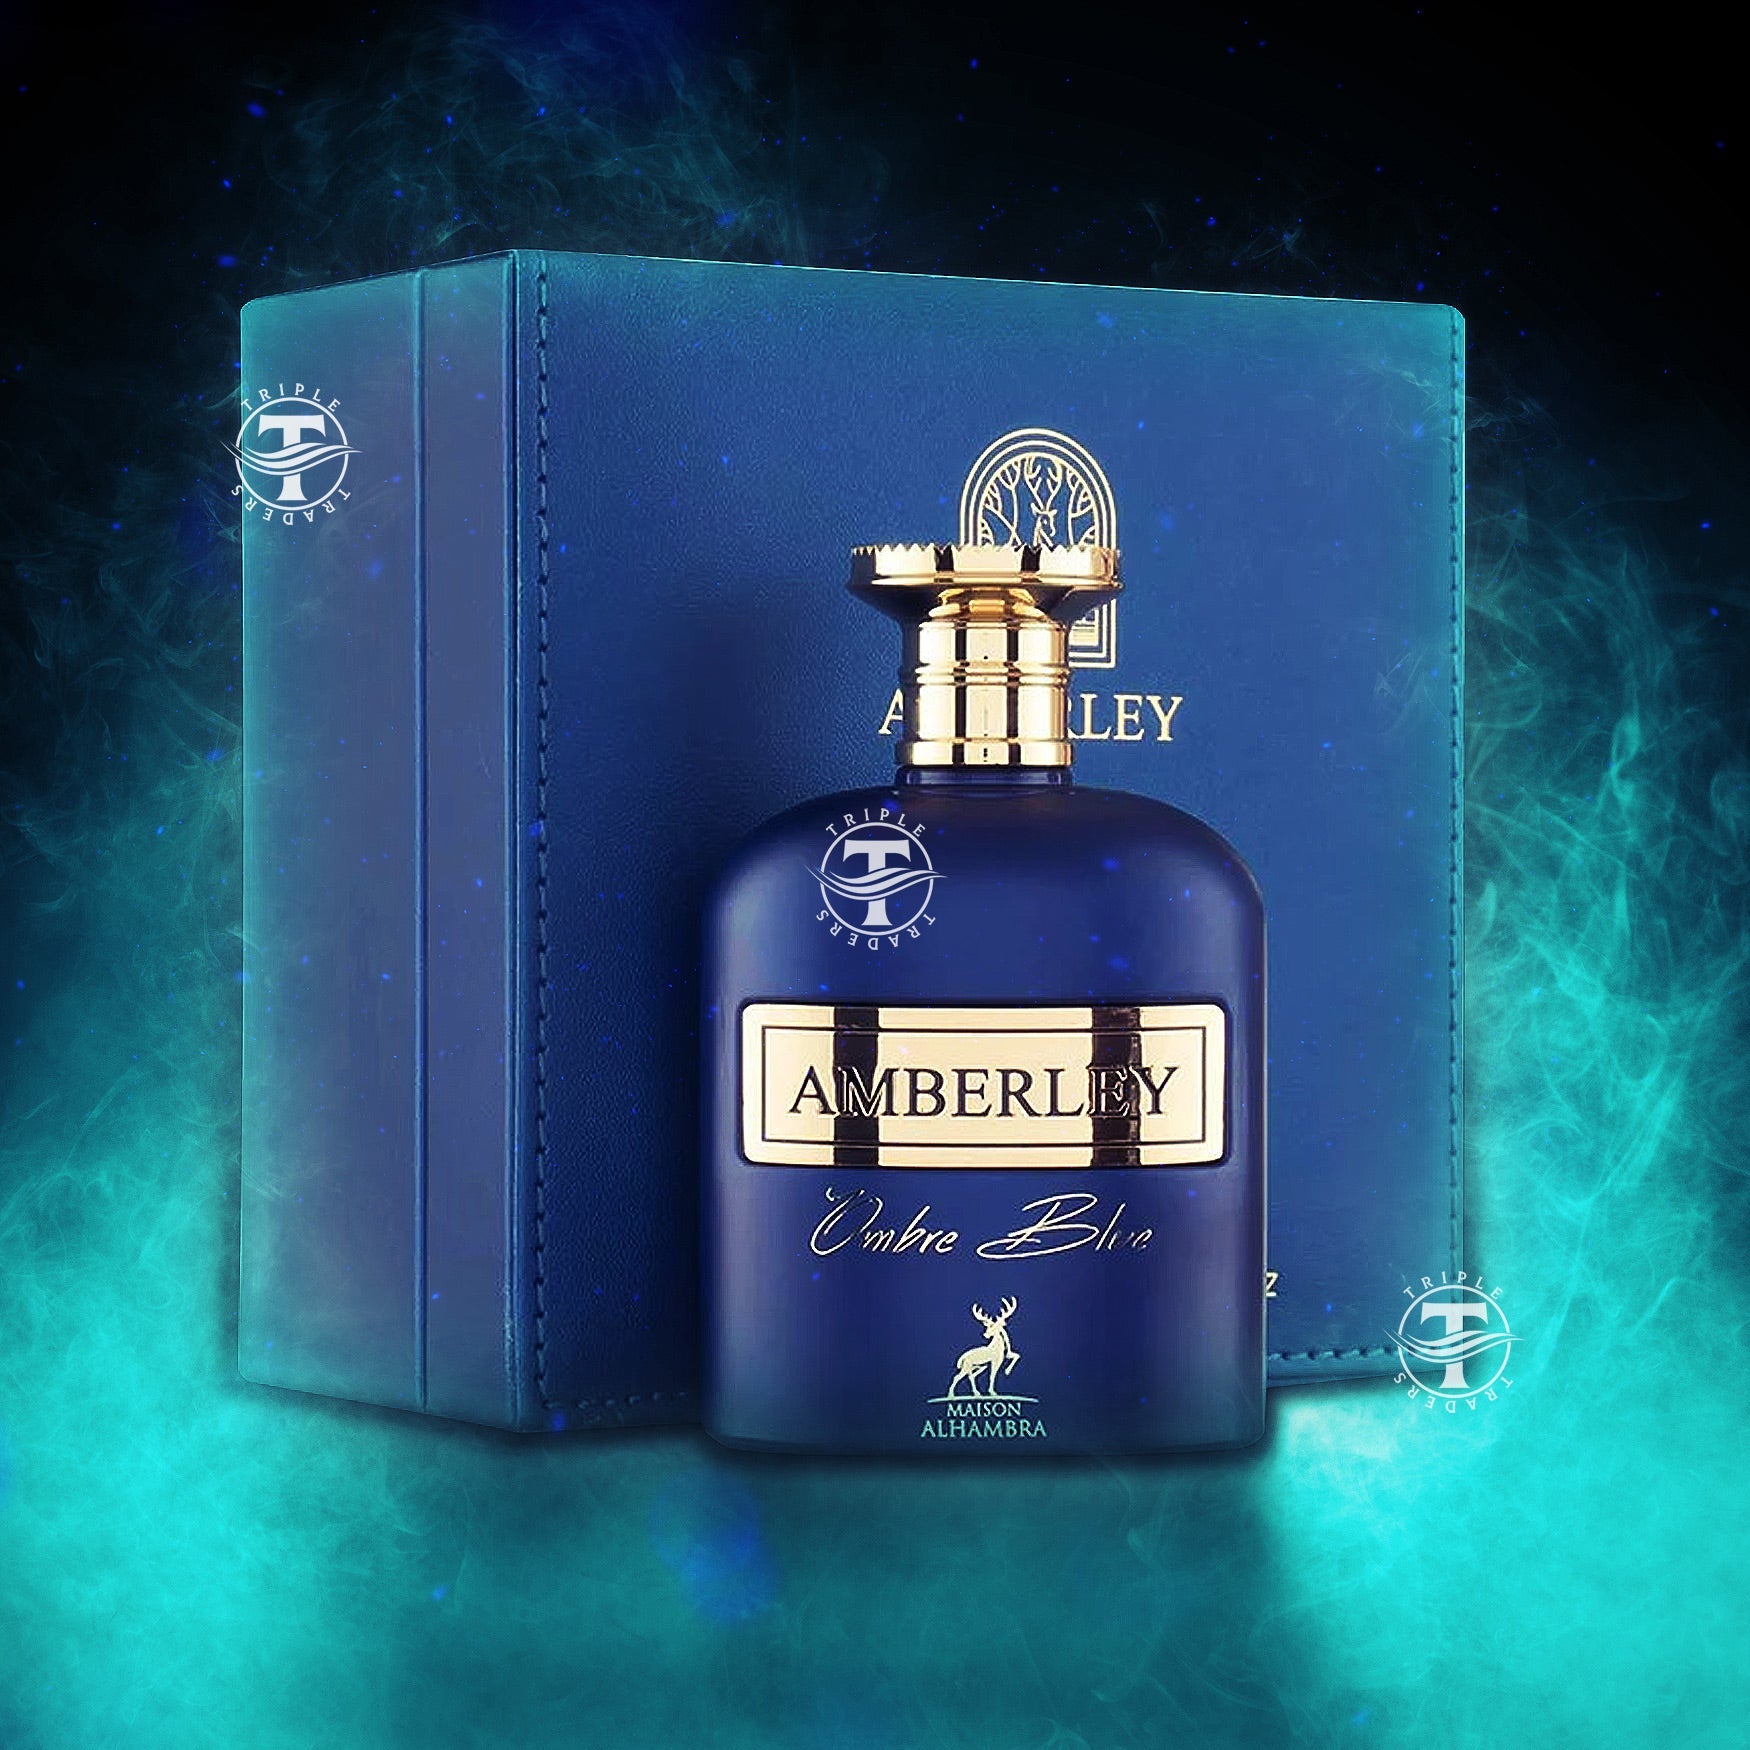 Amberley Pur Oud Eau De Parfum 100ml 3.4 FL OZ By Maison Alhambra Latt –  Triple Traders